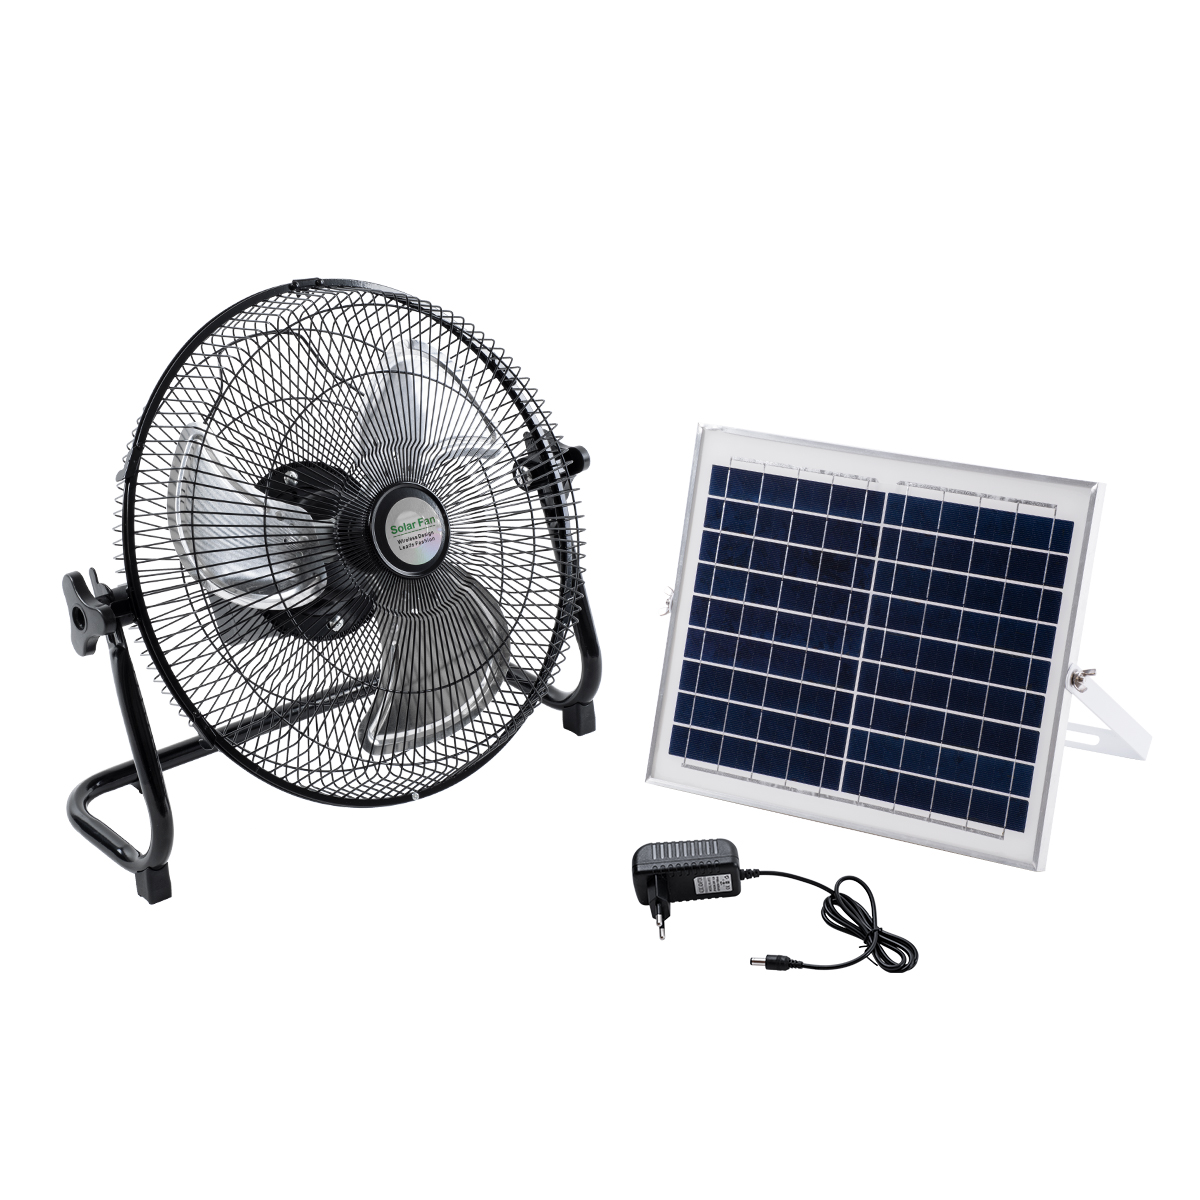 GloboStar® SOLARO-FAN 85352 Solar Fan Αυτόνομος Ηλιακός Επιδαπέδιος Ανεμιστήρας 25W 2 Λειτουργιών Ρεύματος με AC 220-240V ή με Φωτοβολταϊκό Panel 9V 12W & Επαναφορτιζόμενη Μπαταρία Li-ion 7.4V 4400mAh – 12 Ταχύτητες – Ενσωματωμένο USB 2.0 Charger Συσκευών – IP20 – Μ42 x Π20 x Υ35cm – Μαύρο & Ασημί – 2 Years Warranty